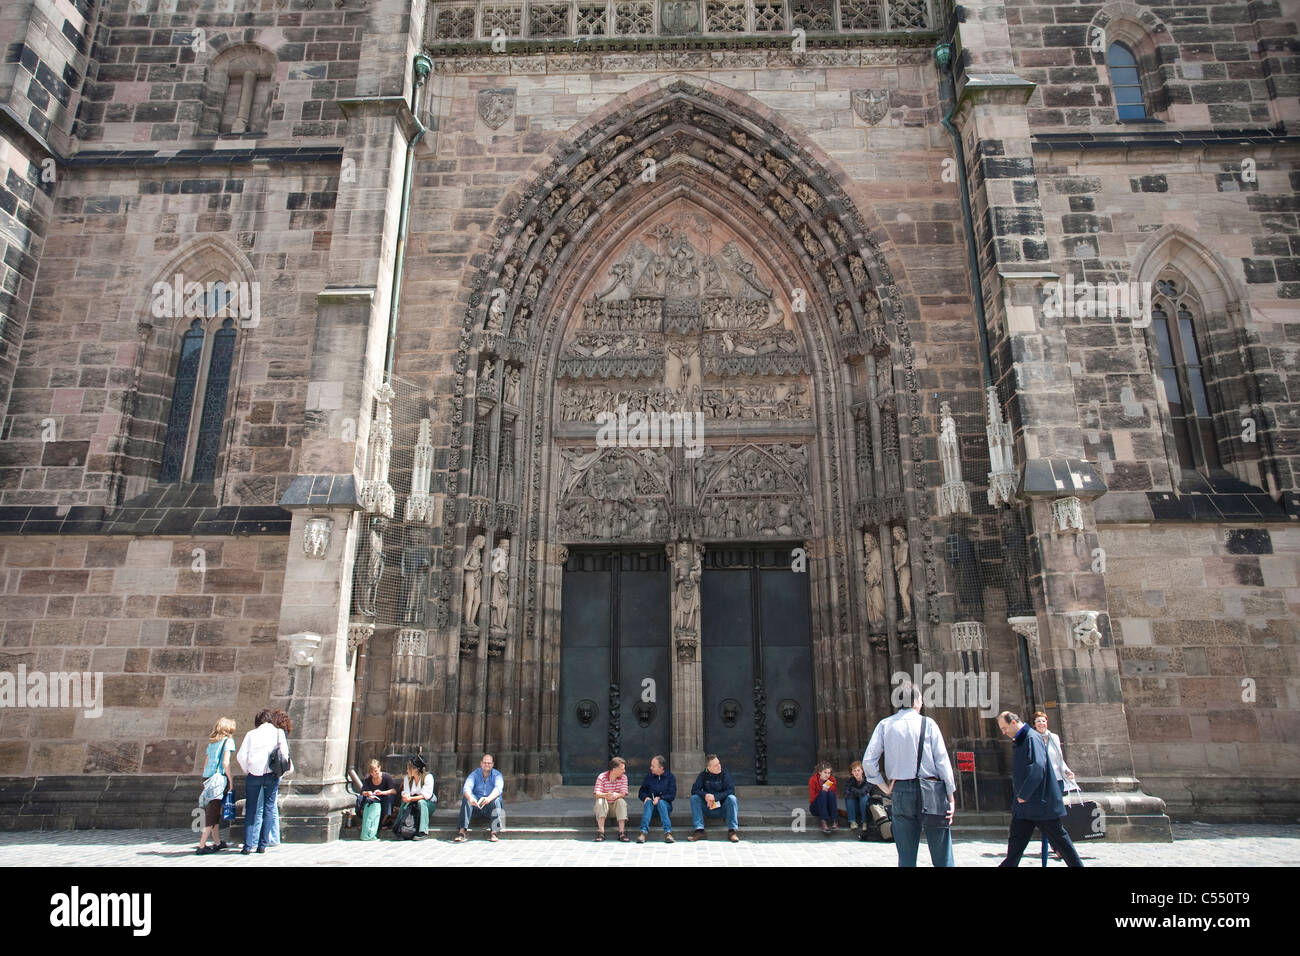 Menschen am Portal der Lorenzkirche in der Altstadt gente en la ciudad vieja la iglesia de St. Lorenz Foto de stock